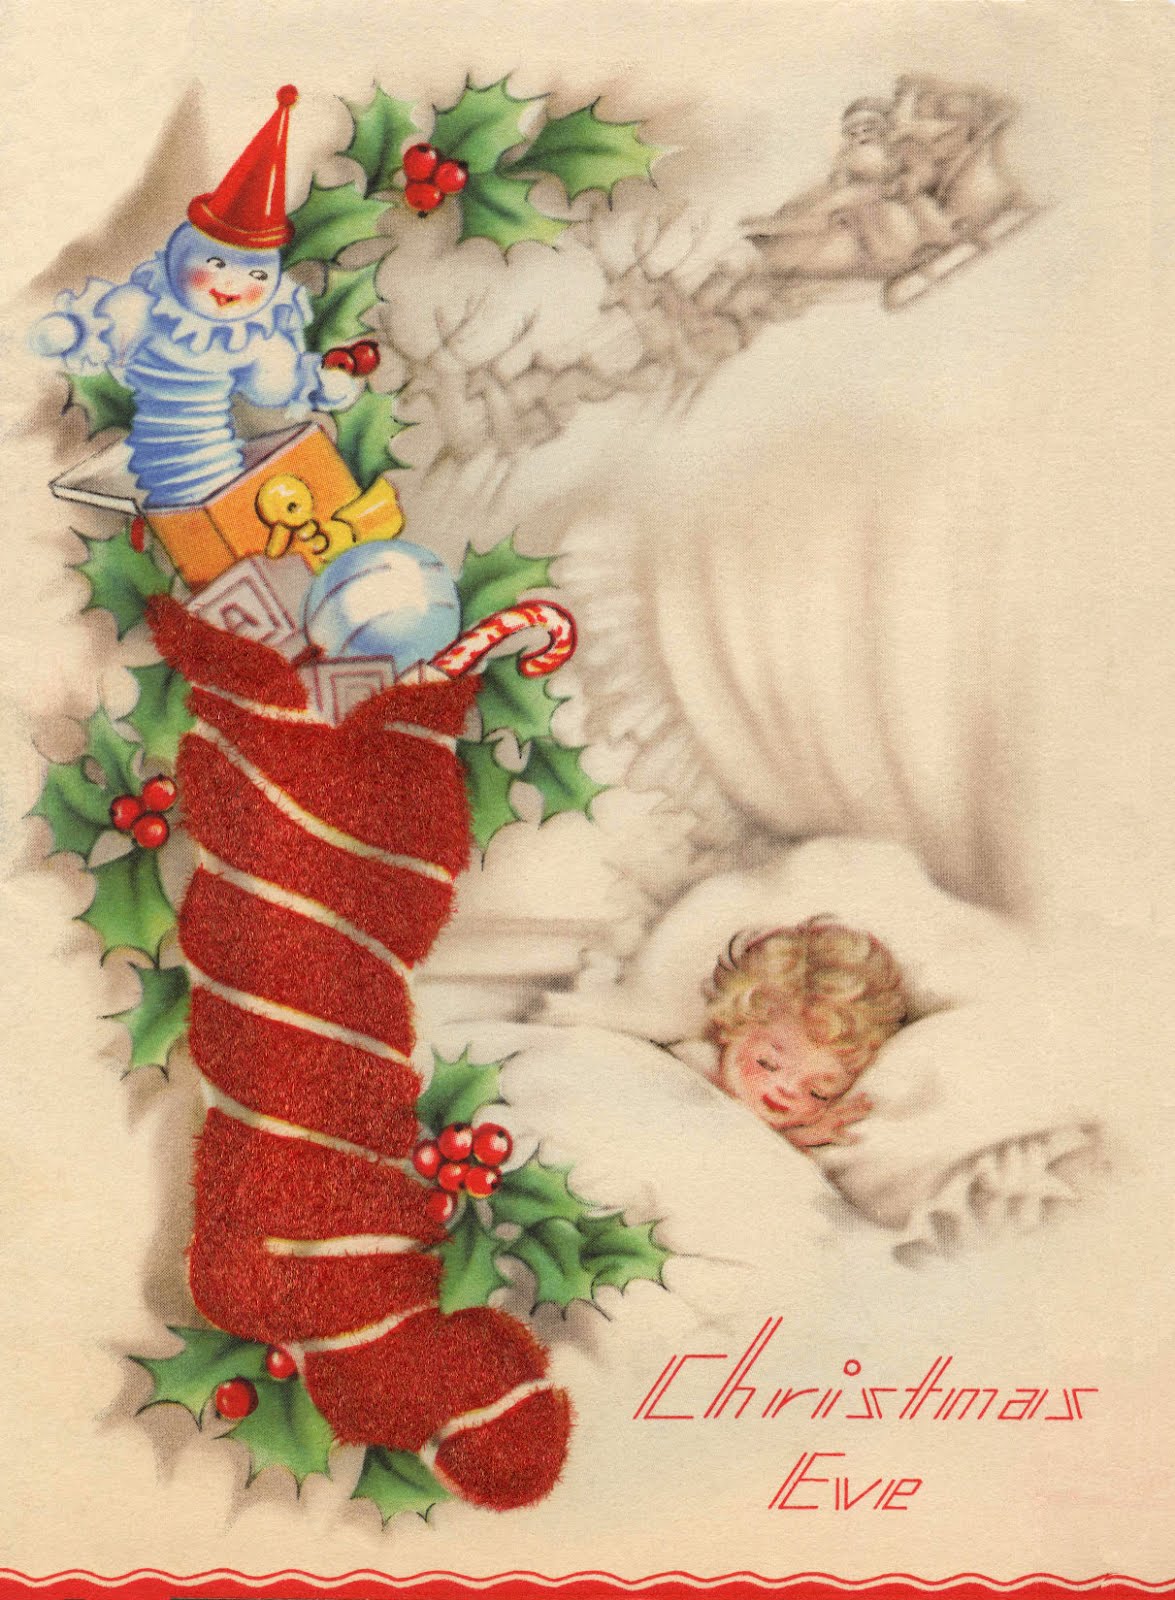 Plan59 :: Retro Vintage 1950s Christmas Ads and Holiday Art